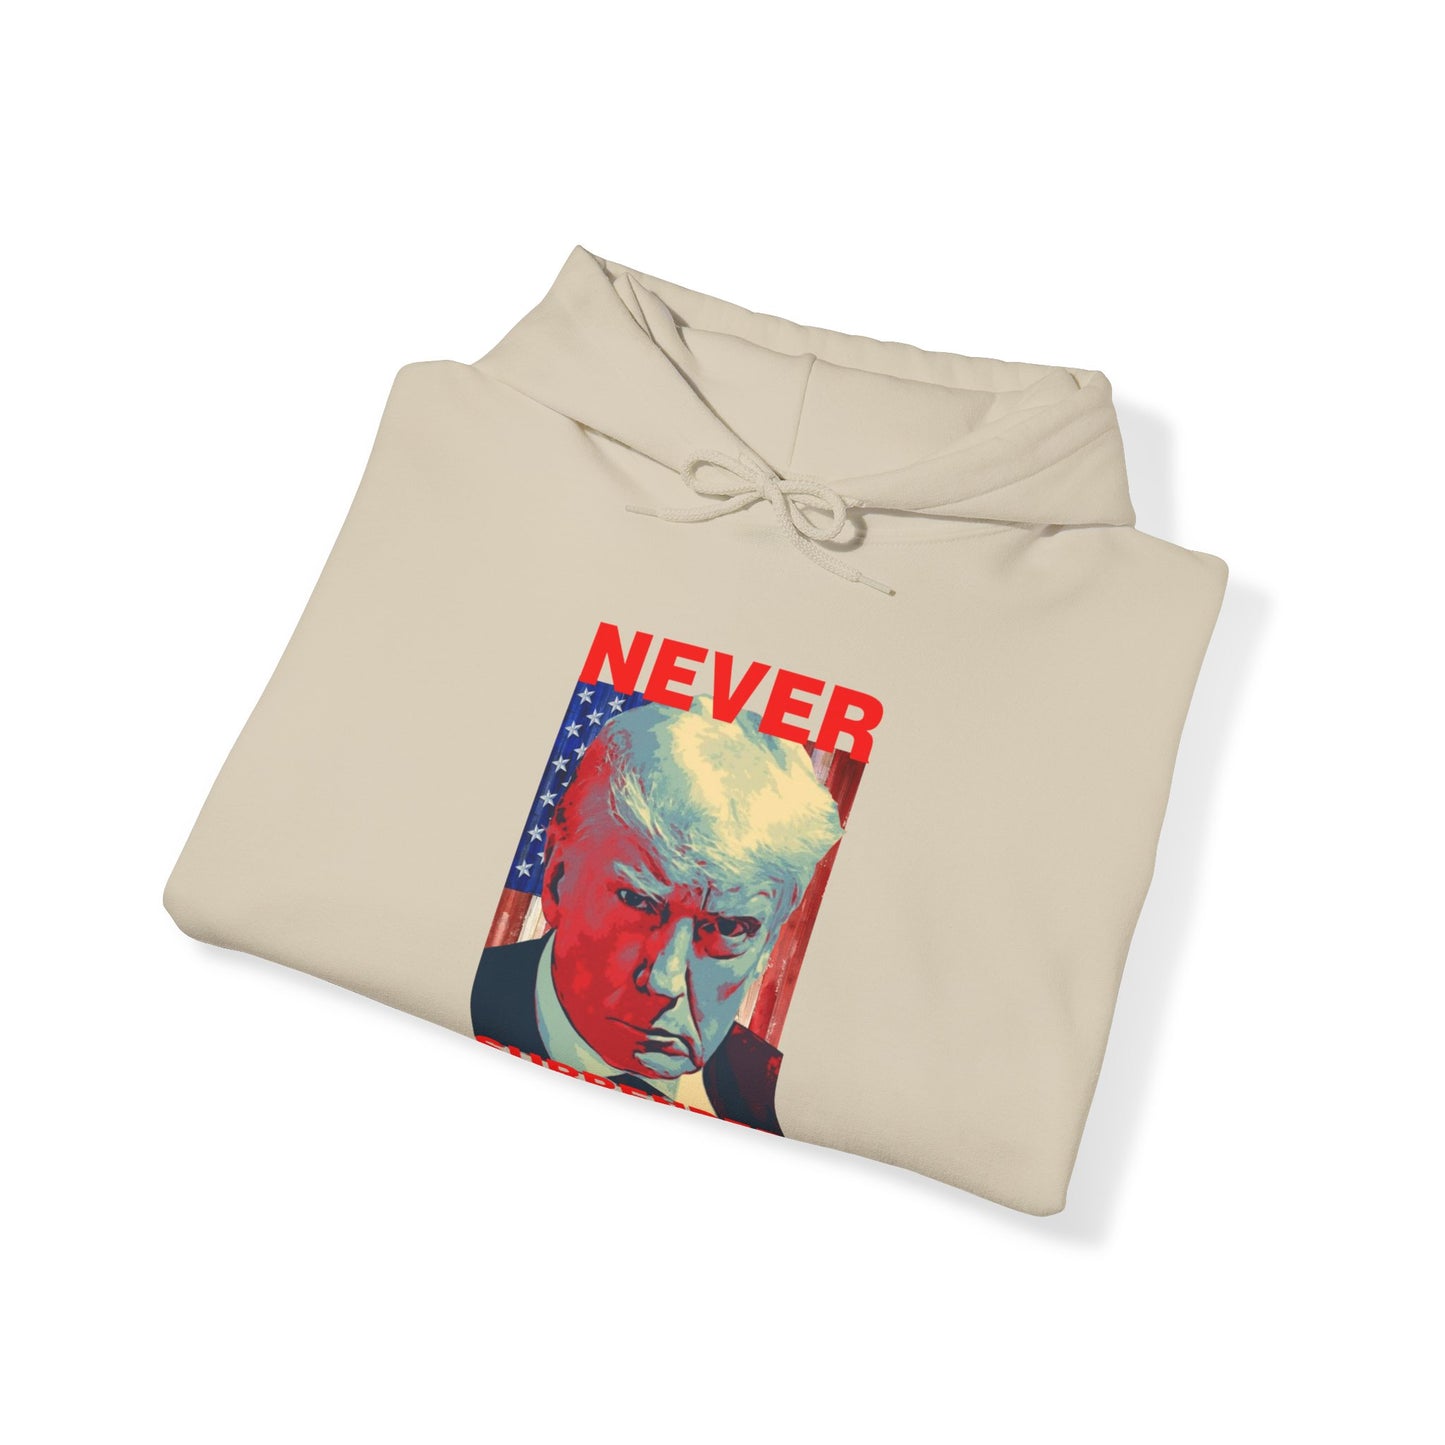 Never Surrender Trump  Heavy Blend™ Hooded Sweatshirt